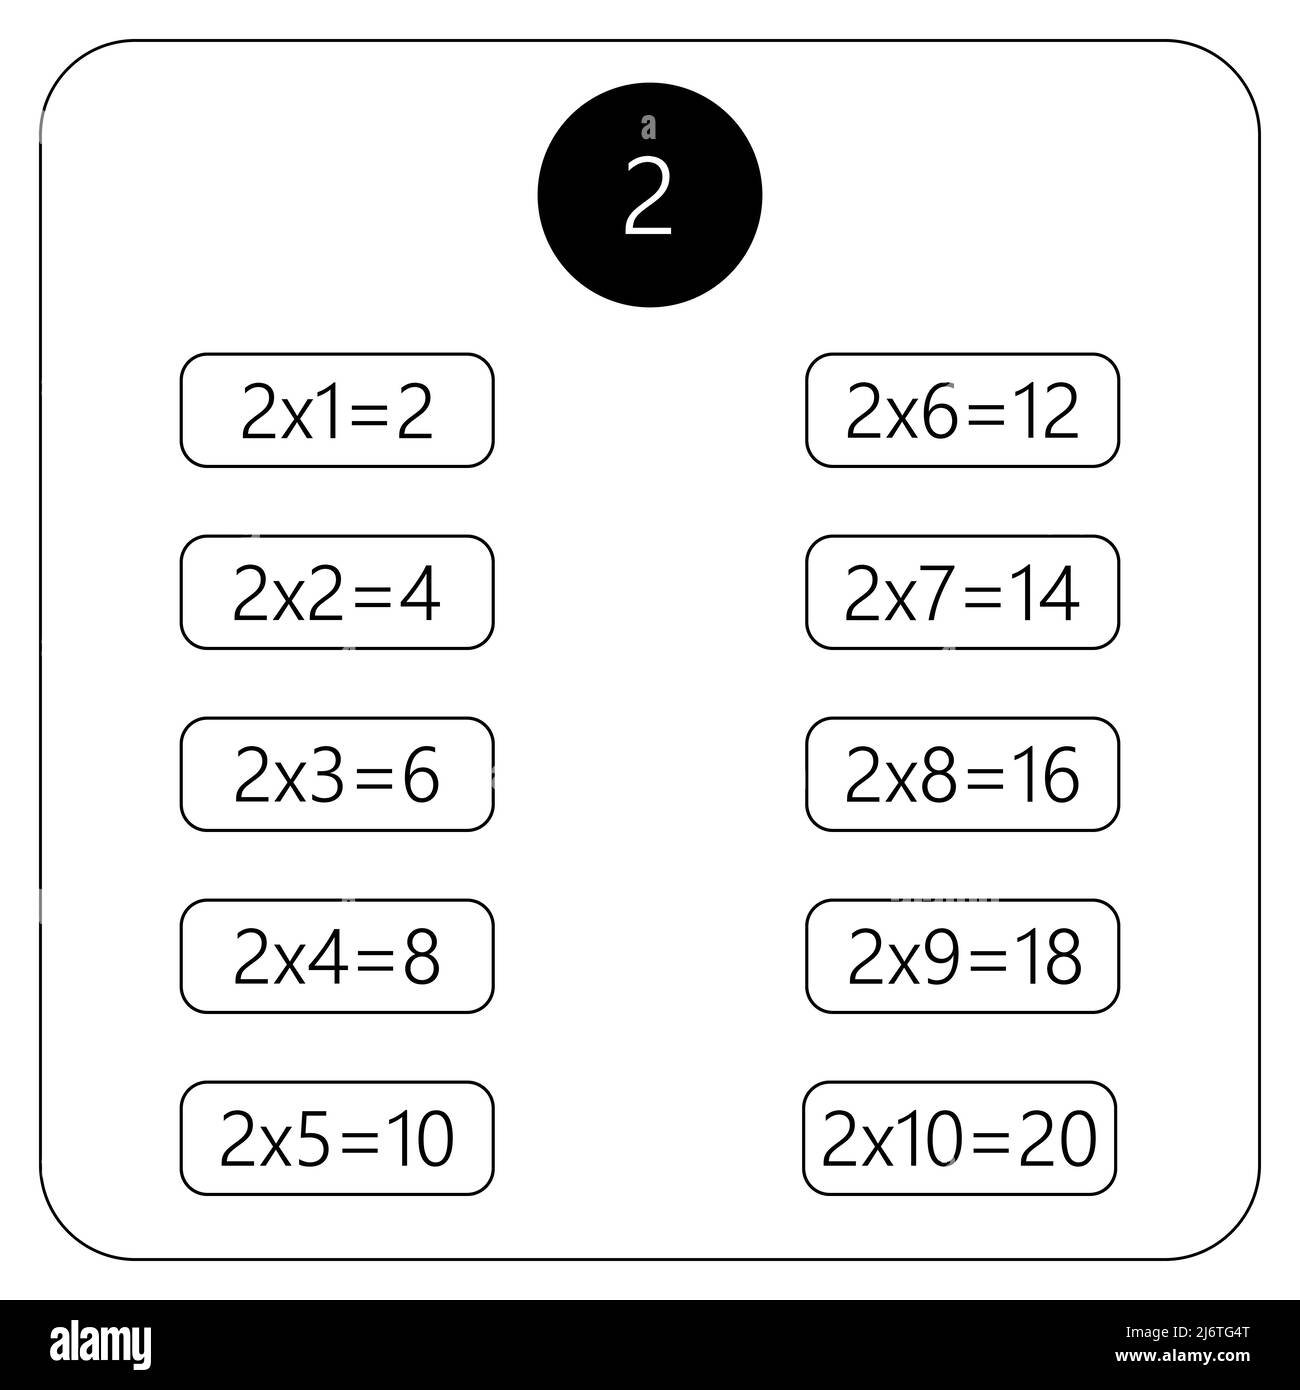 Multiplication Square. School vector illustration. Multiplication Table. Poster for kids education. Maths child card. Stock Vector